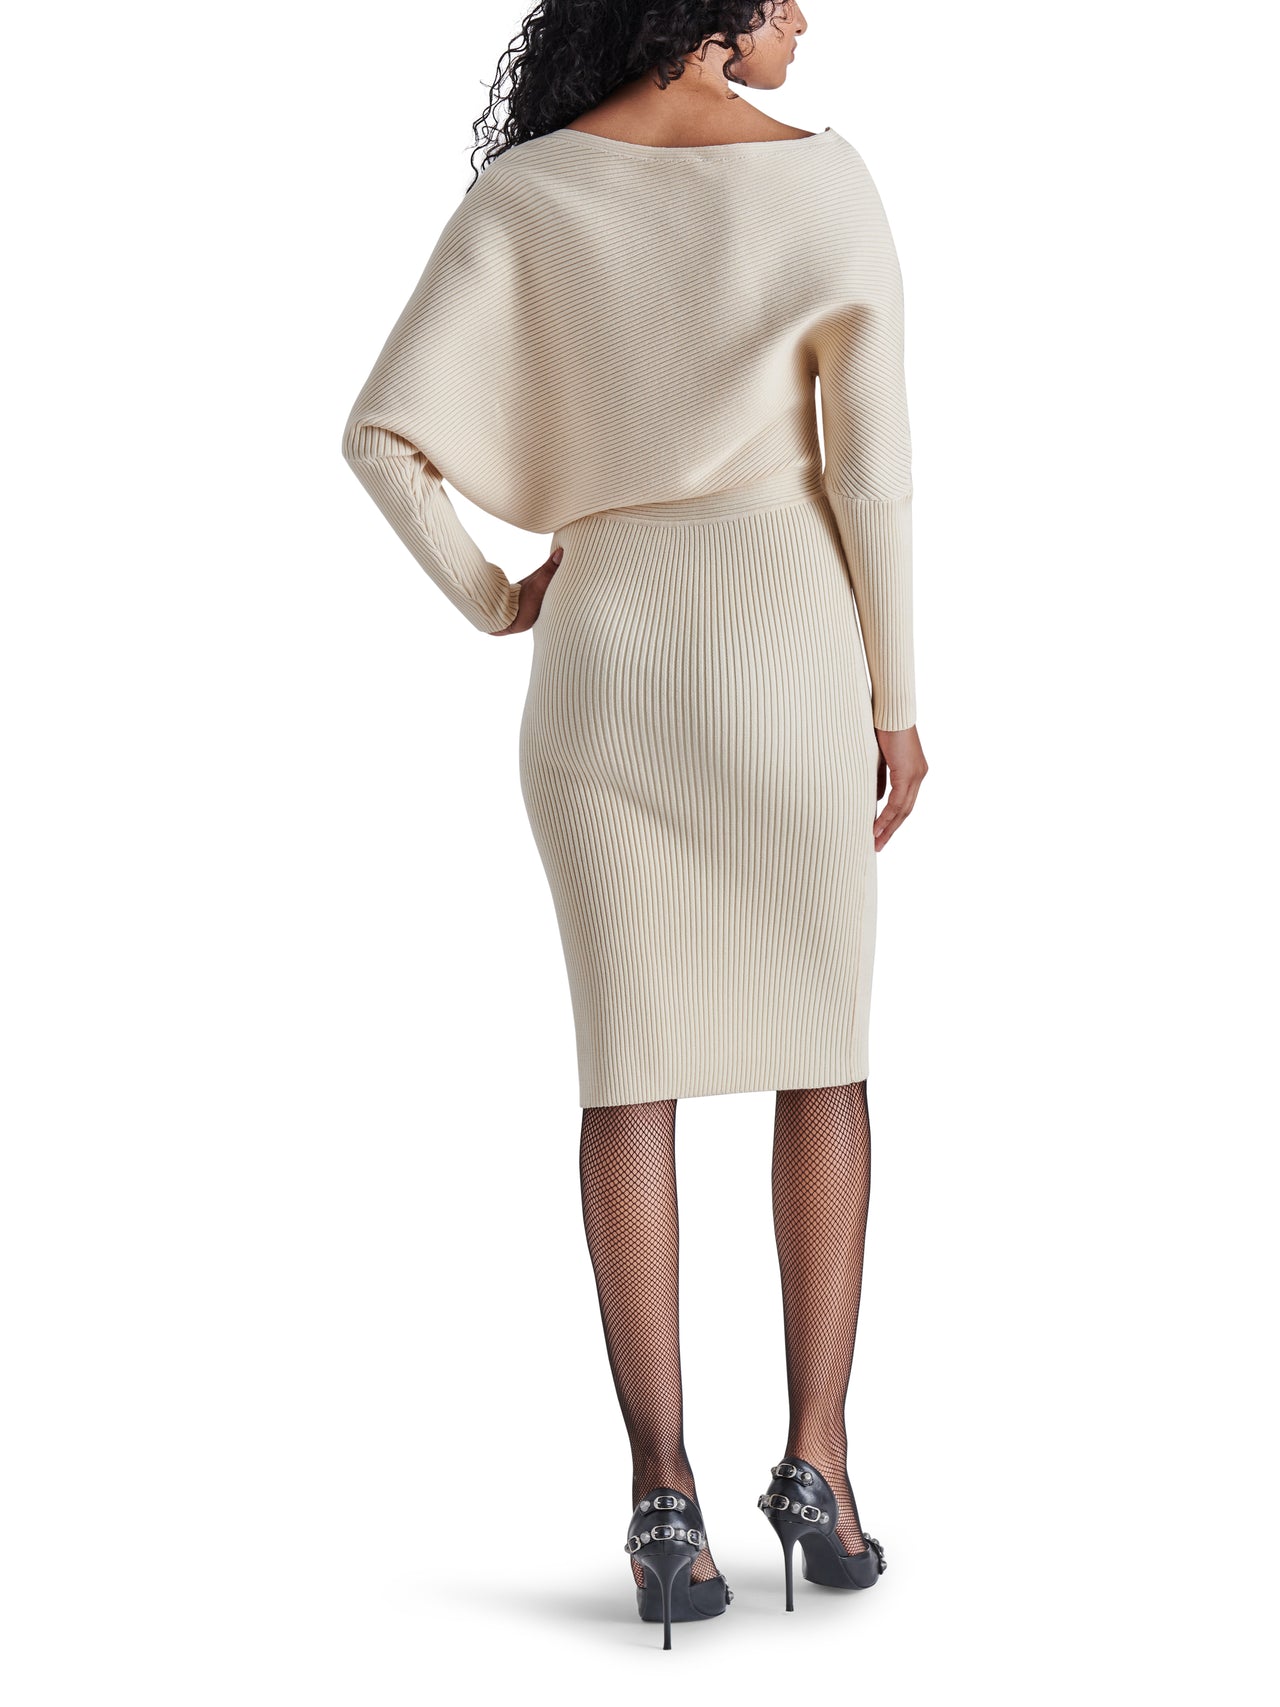 Lori Off The Shoulder Dress White, Mini Dress by Steve Madden | LIT Boutique